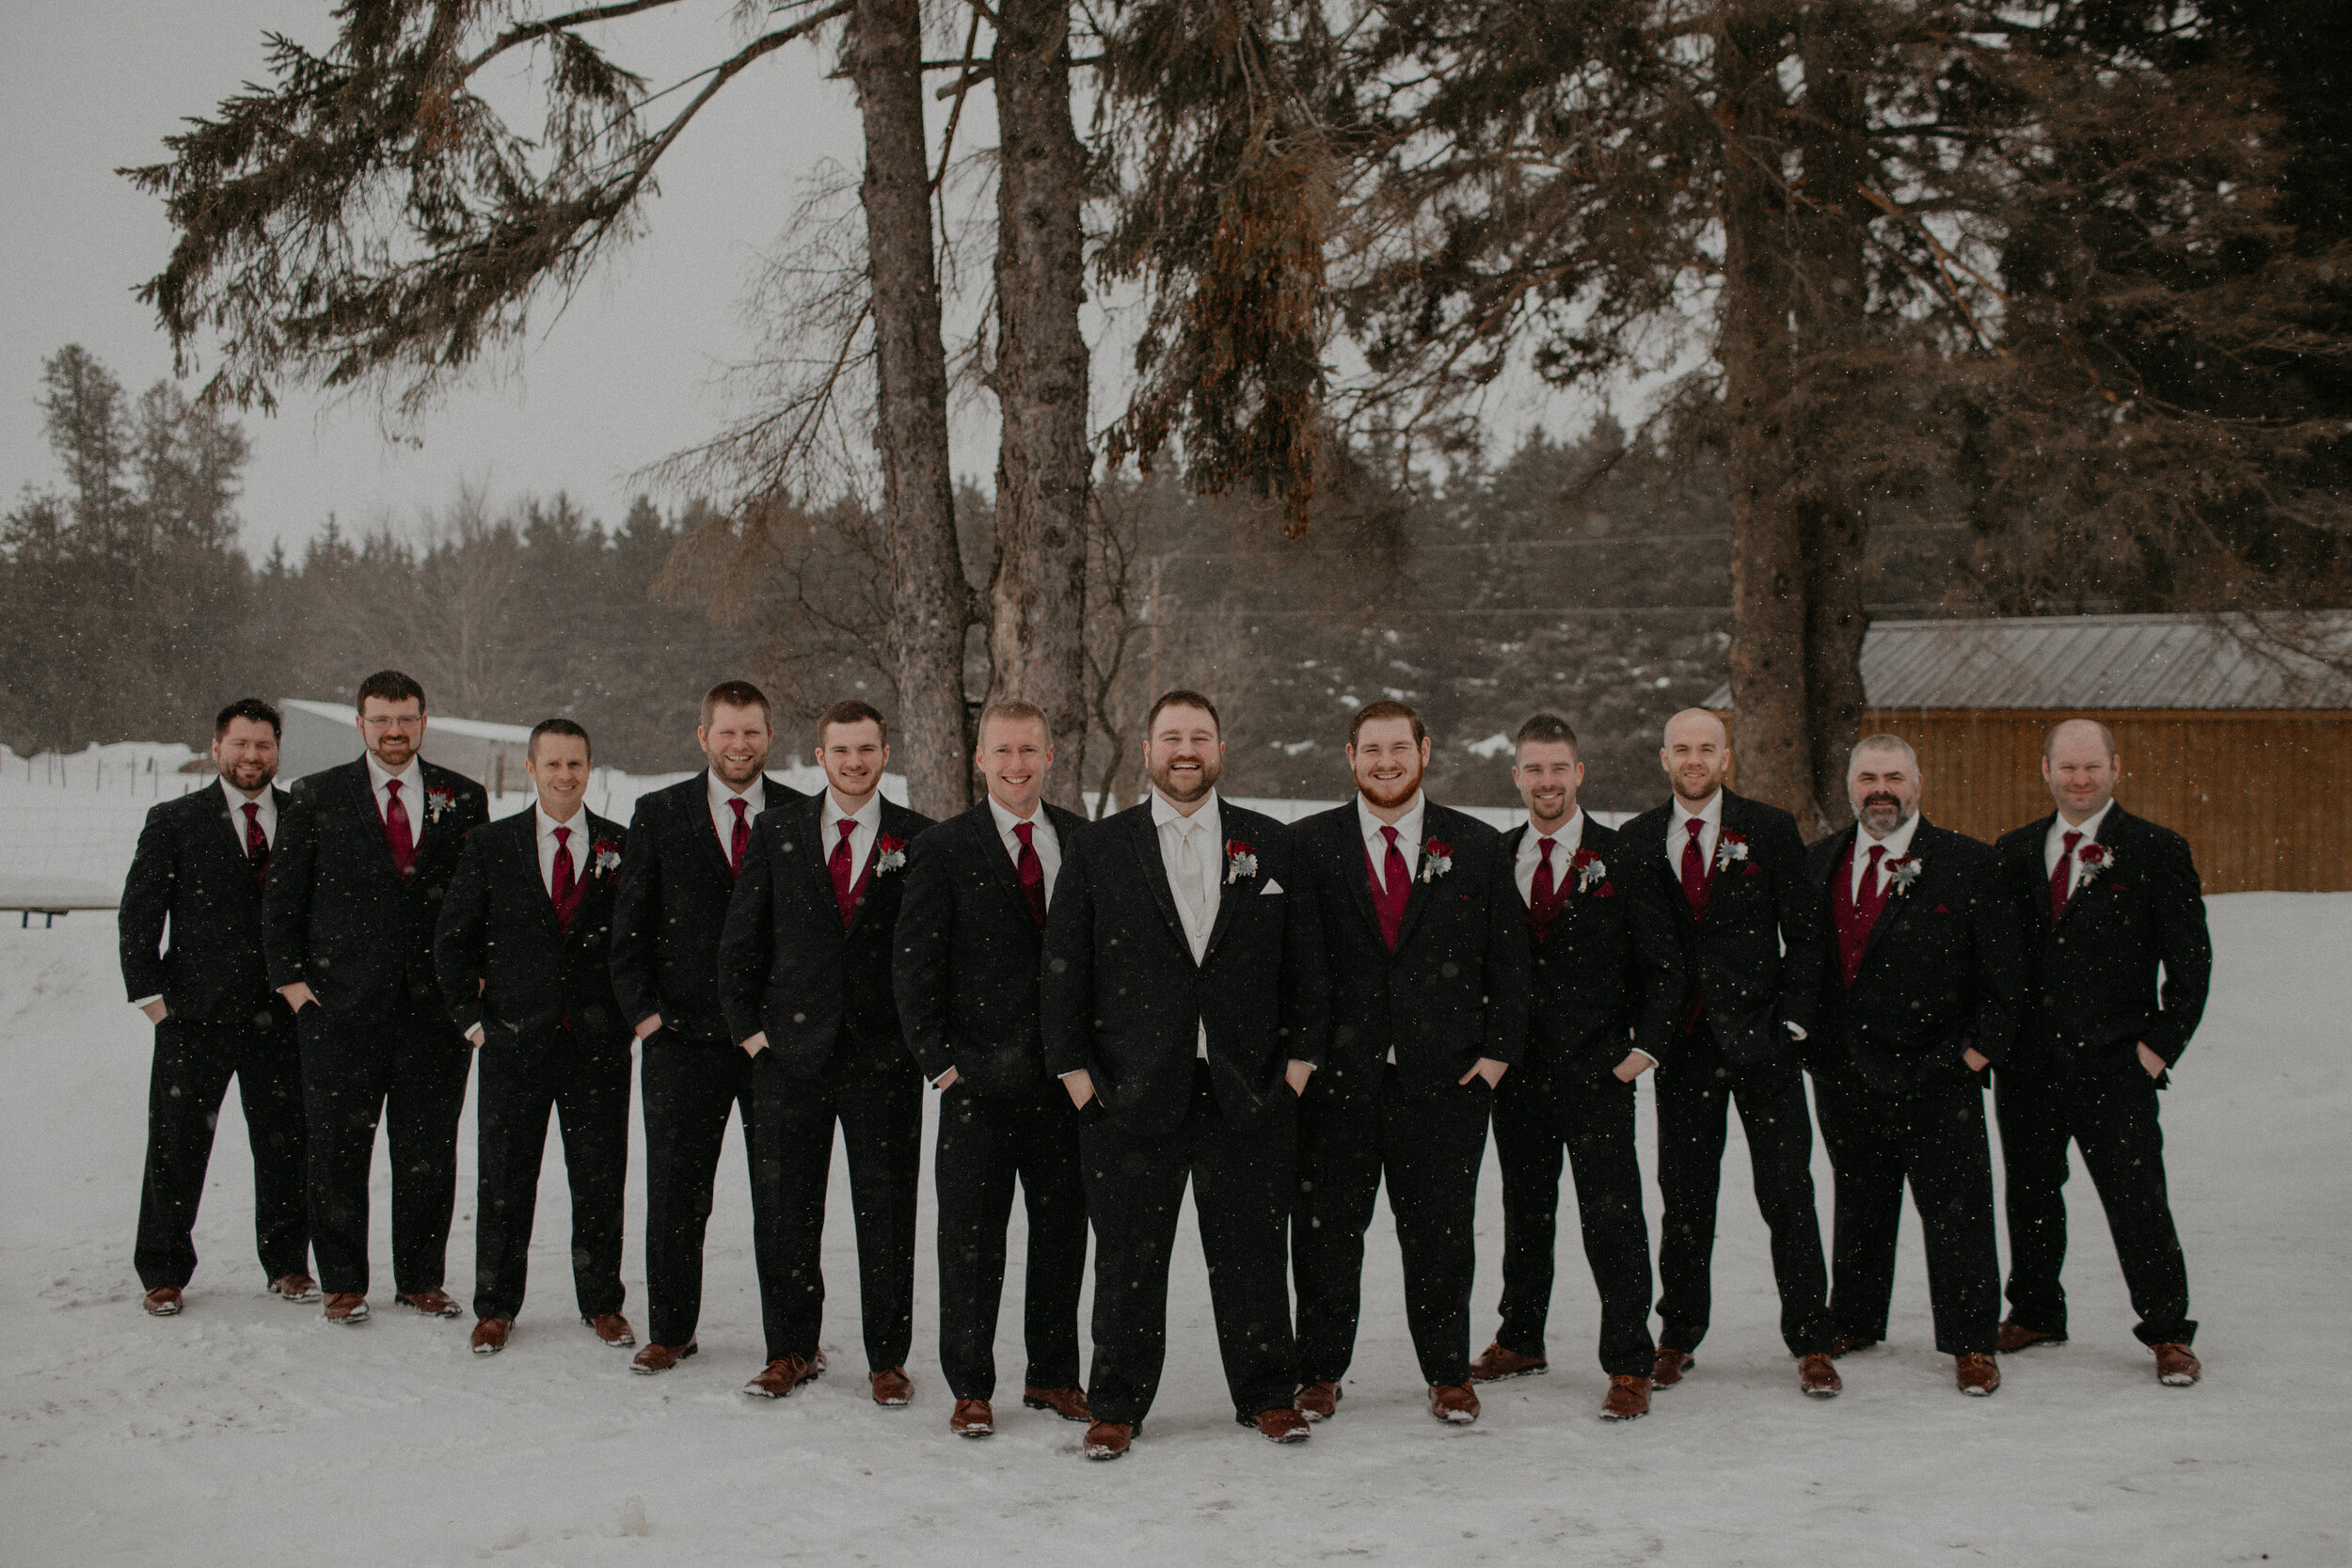  Andrea Wanger Photography cozy winter Wisconsin wedding. Perfect Wisconsin wedding in February. Elegant winter wedding groom with groomsmen. 